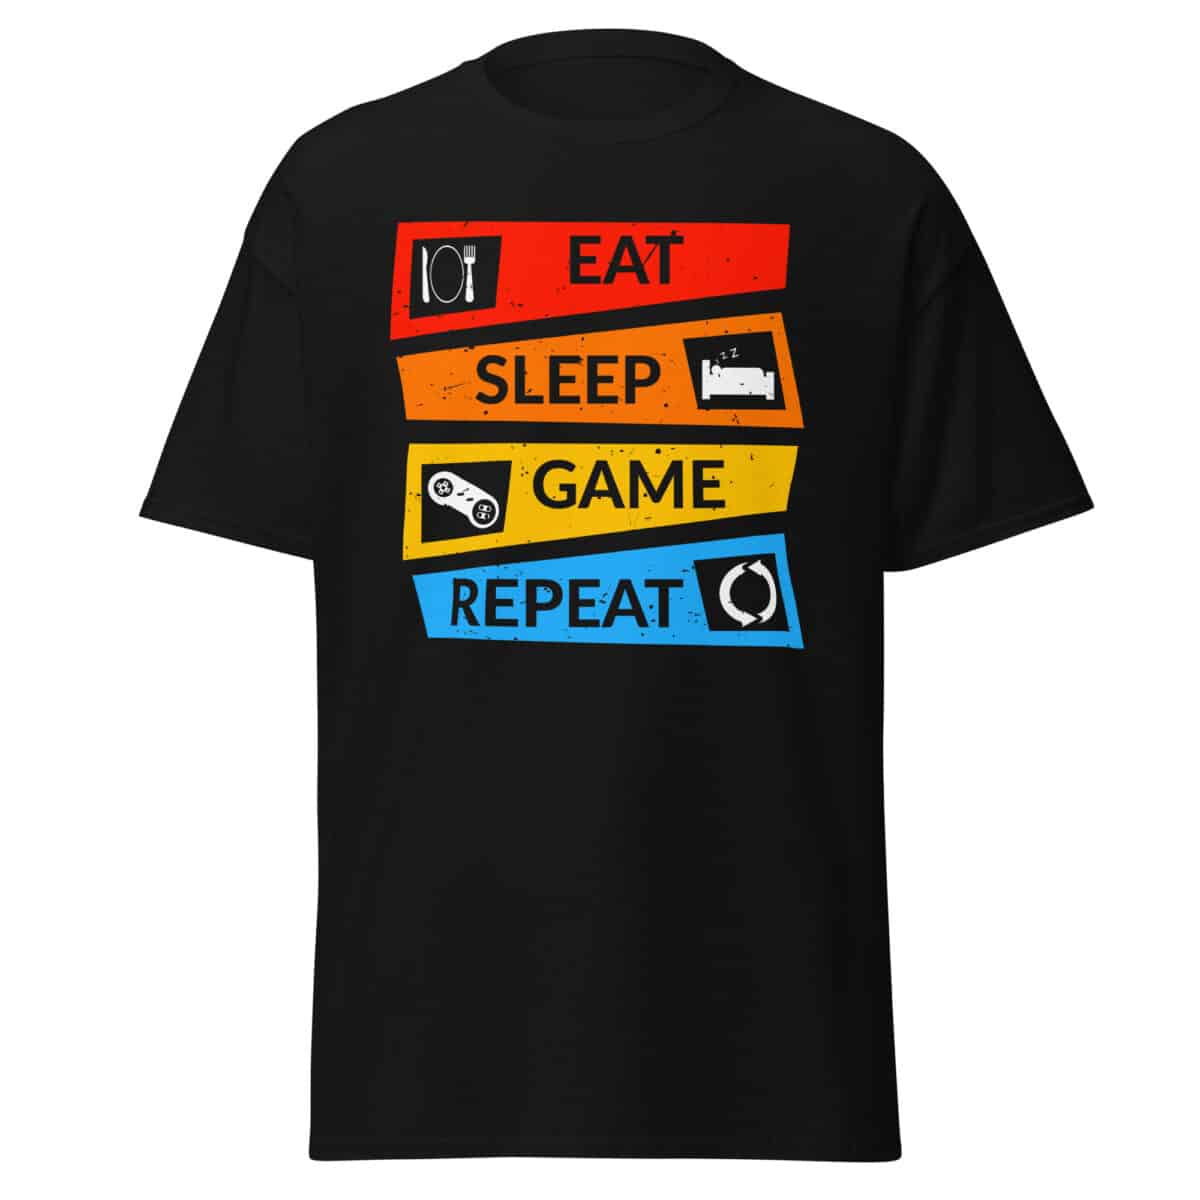 Eat Sleep Game Repeat Shirt Black